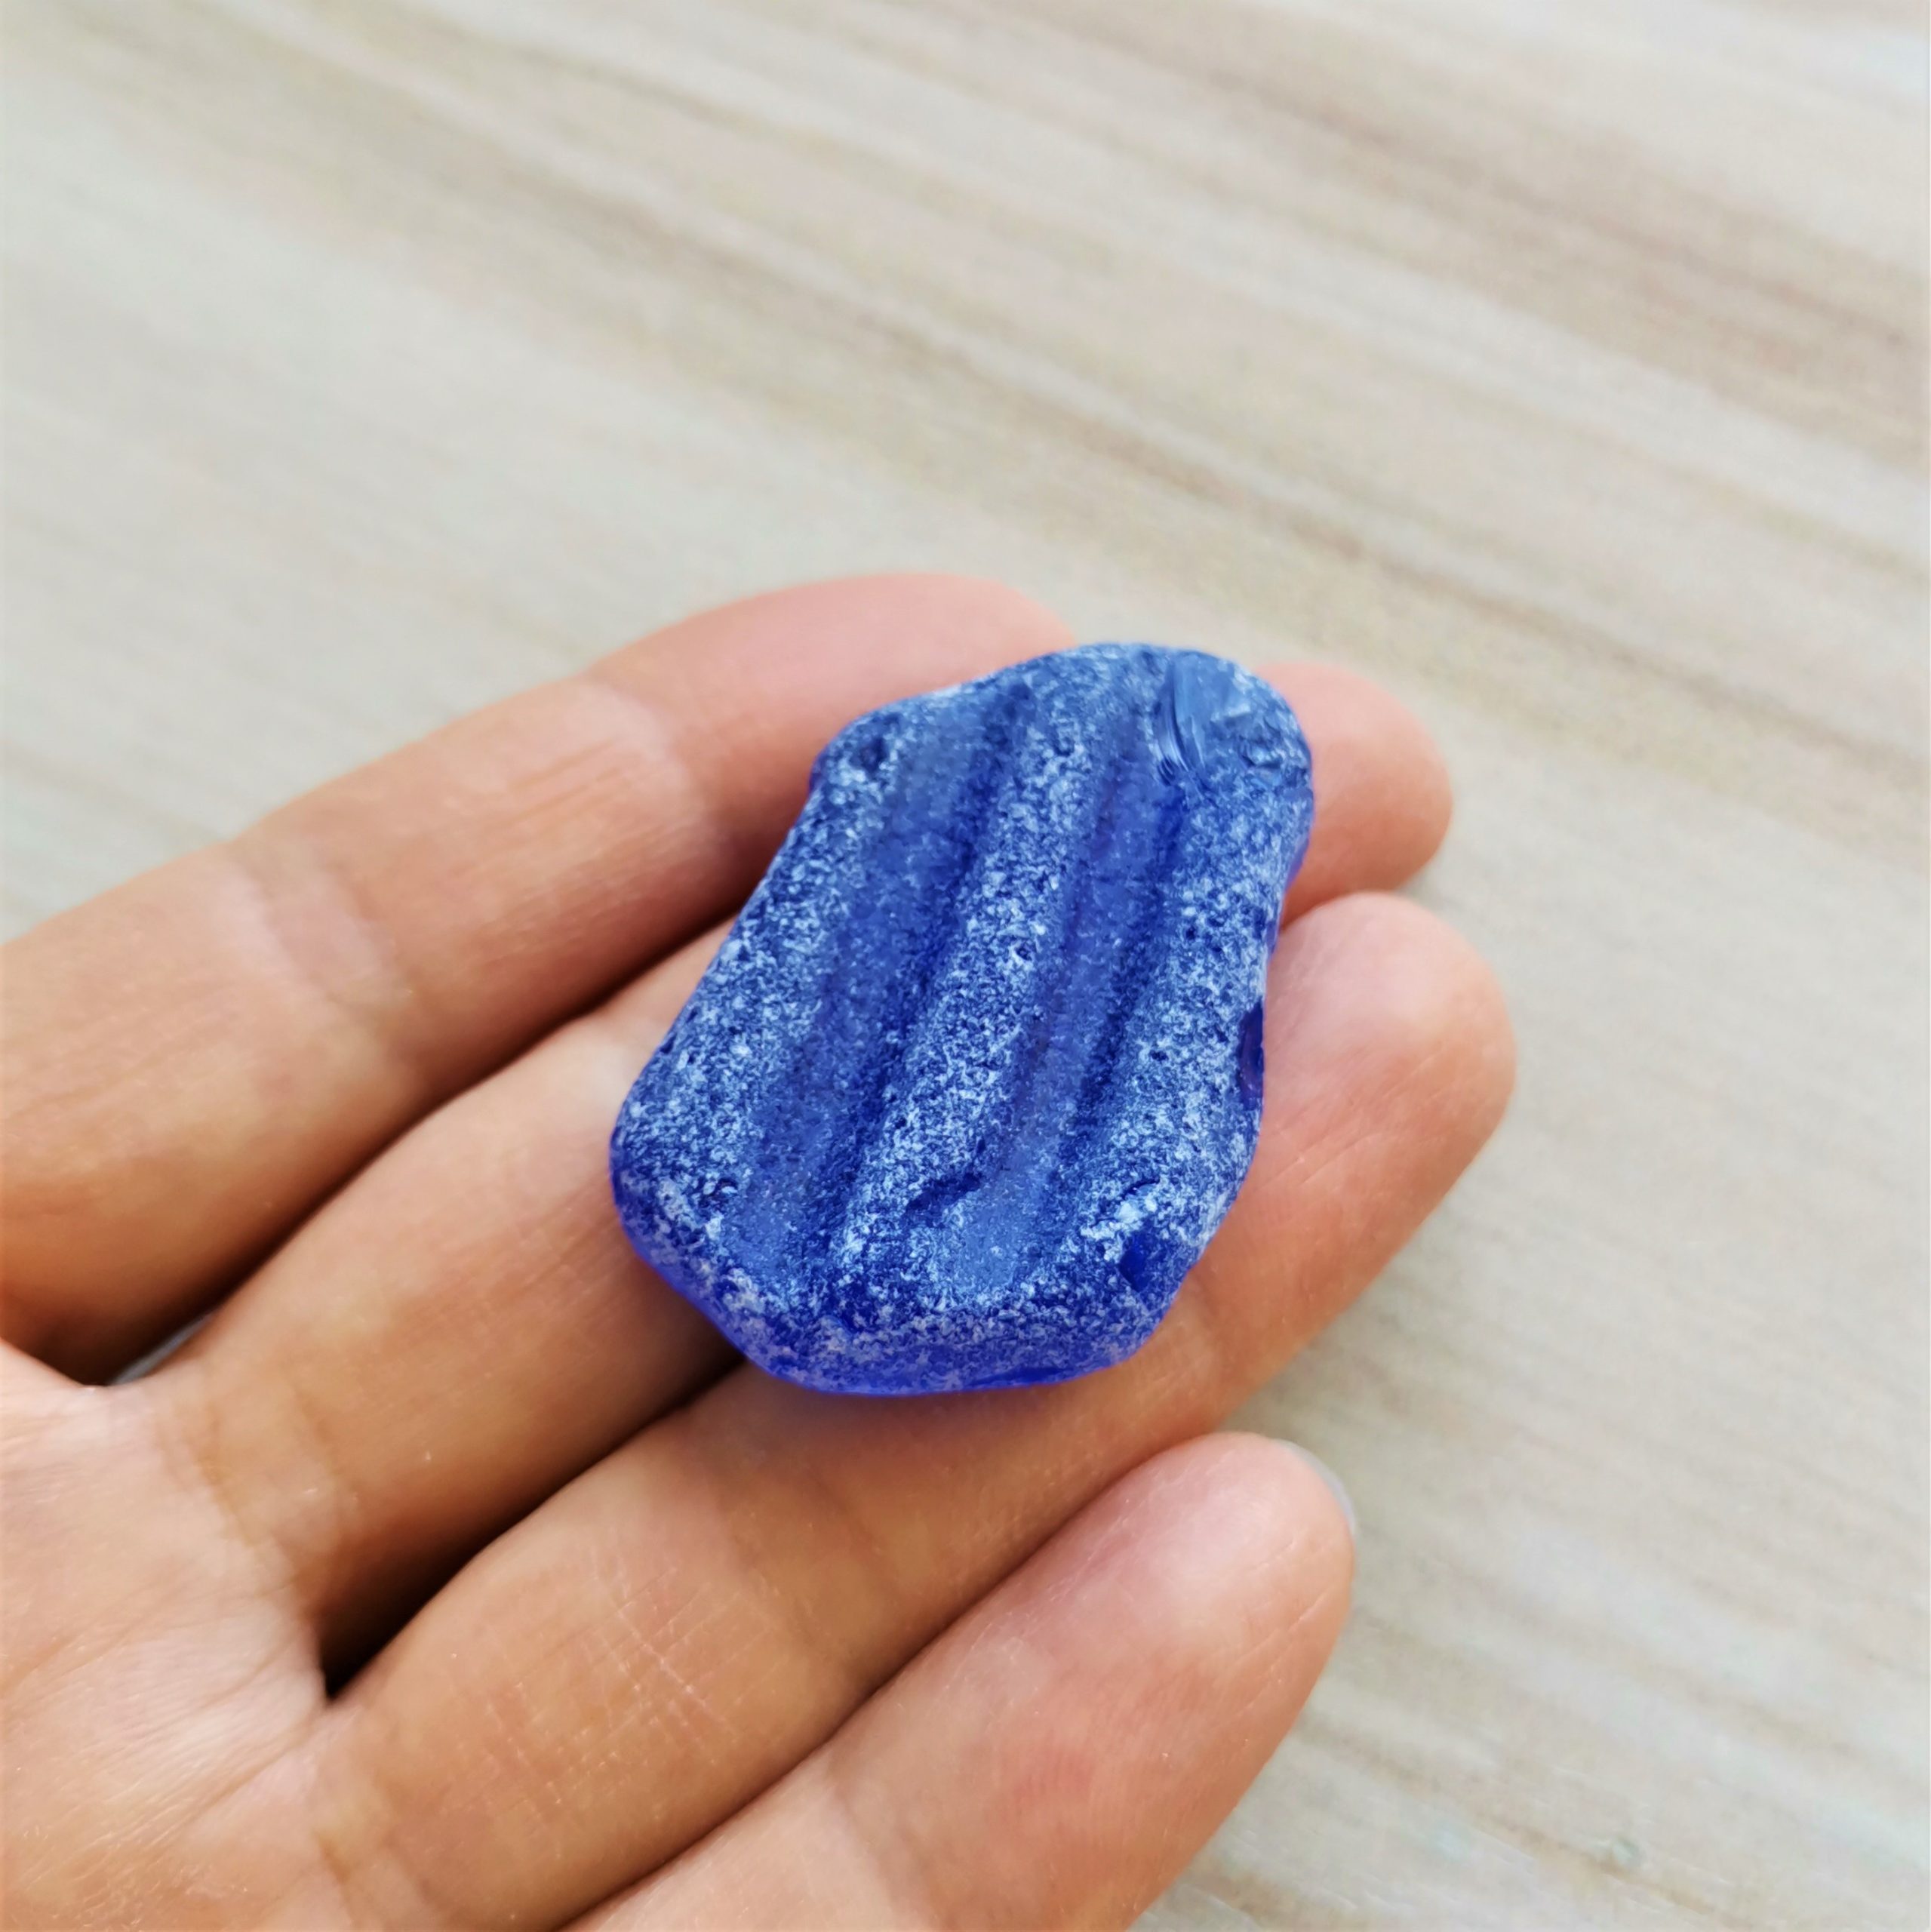 Cobalt Blue sea glass B81